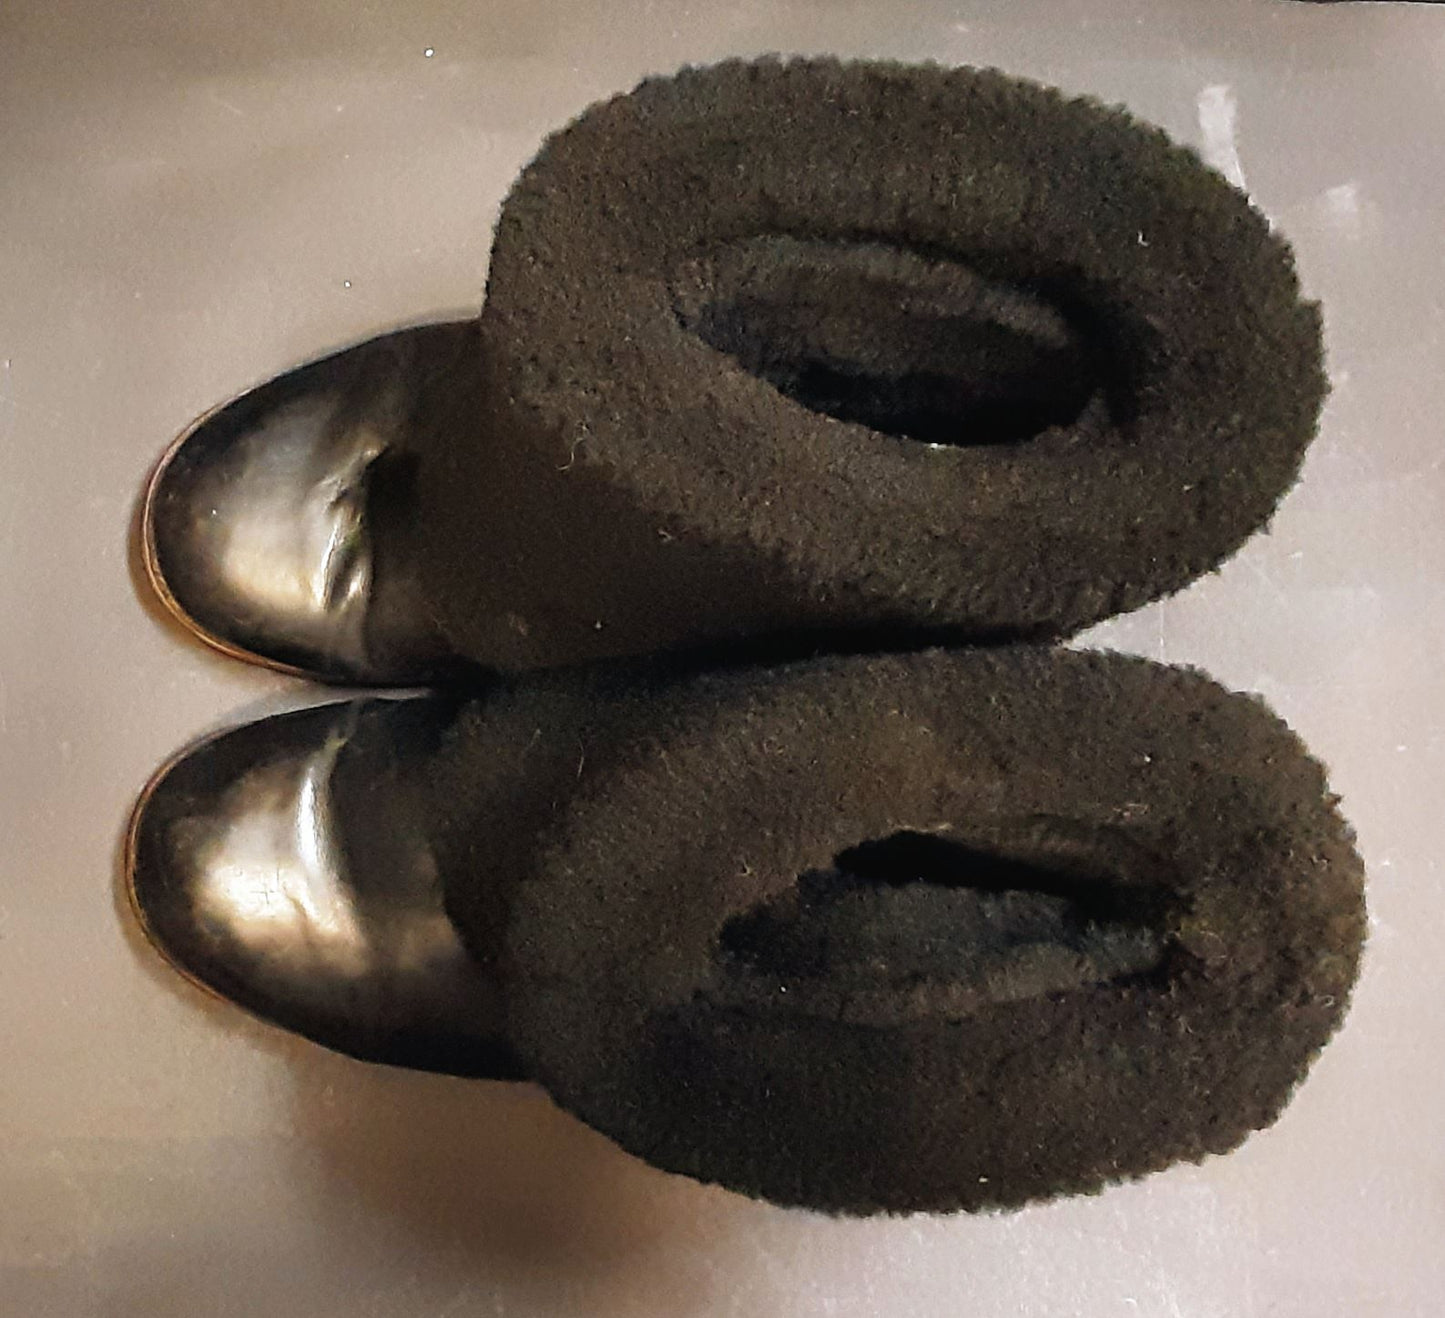 Ugg 1001761 Maylin Black Sheepskin Leather Boots size 6.5